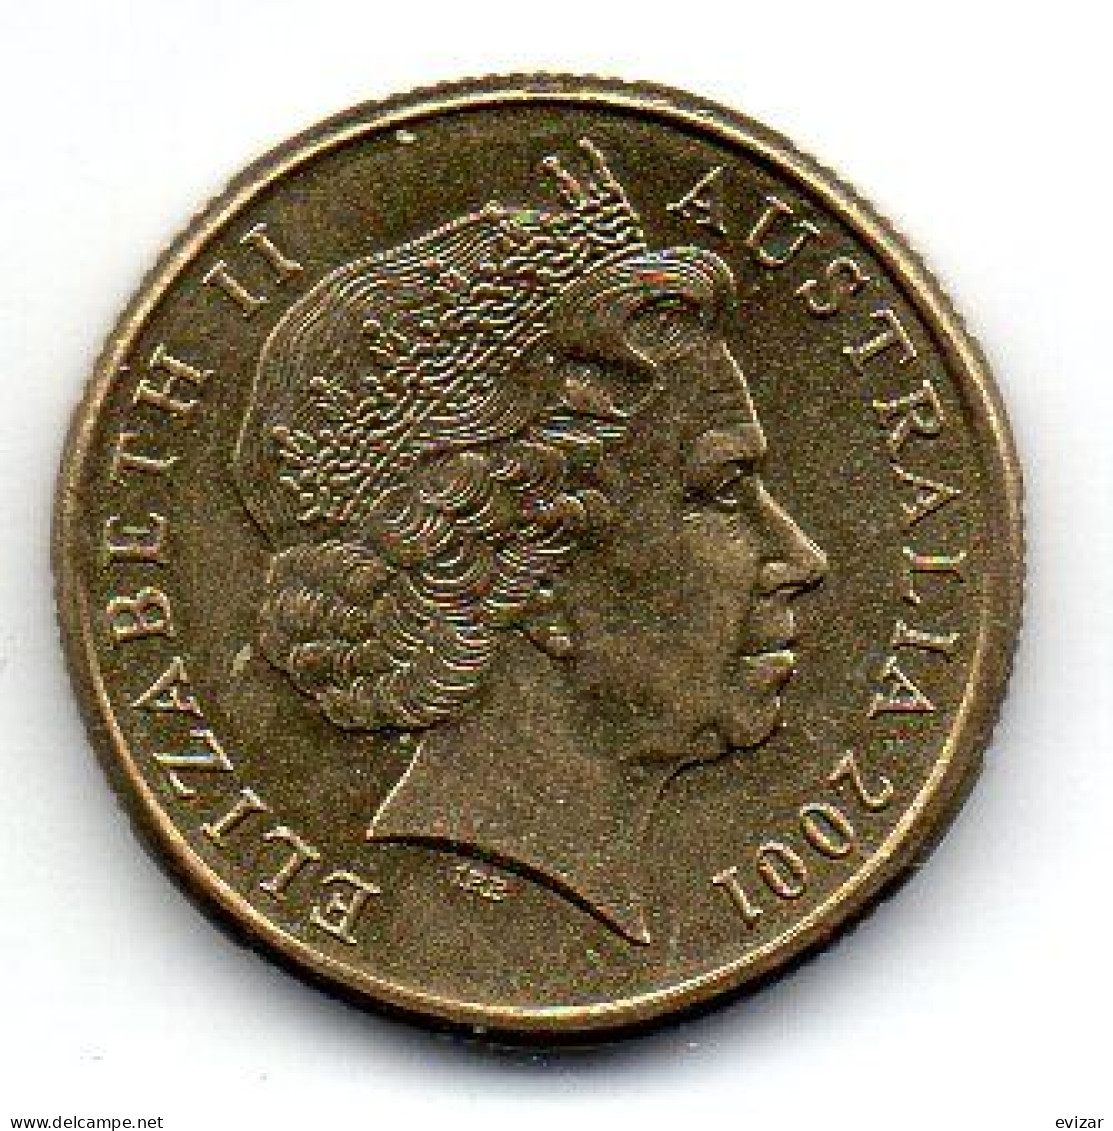 AUSTRALIA, 1 Dollar, Aluminum-Bronze, Year 2001, KM # 682 - Dollar